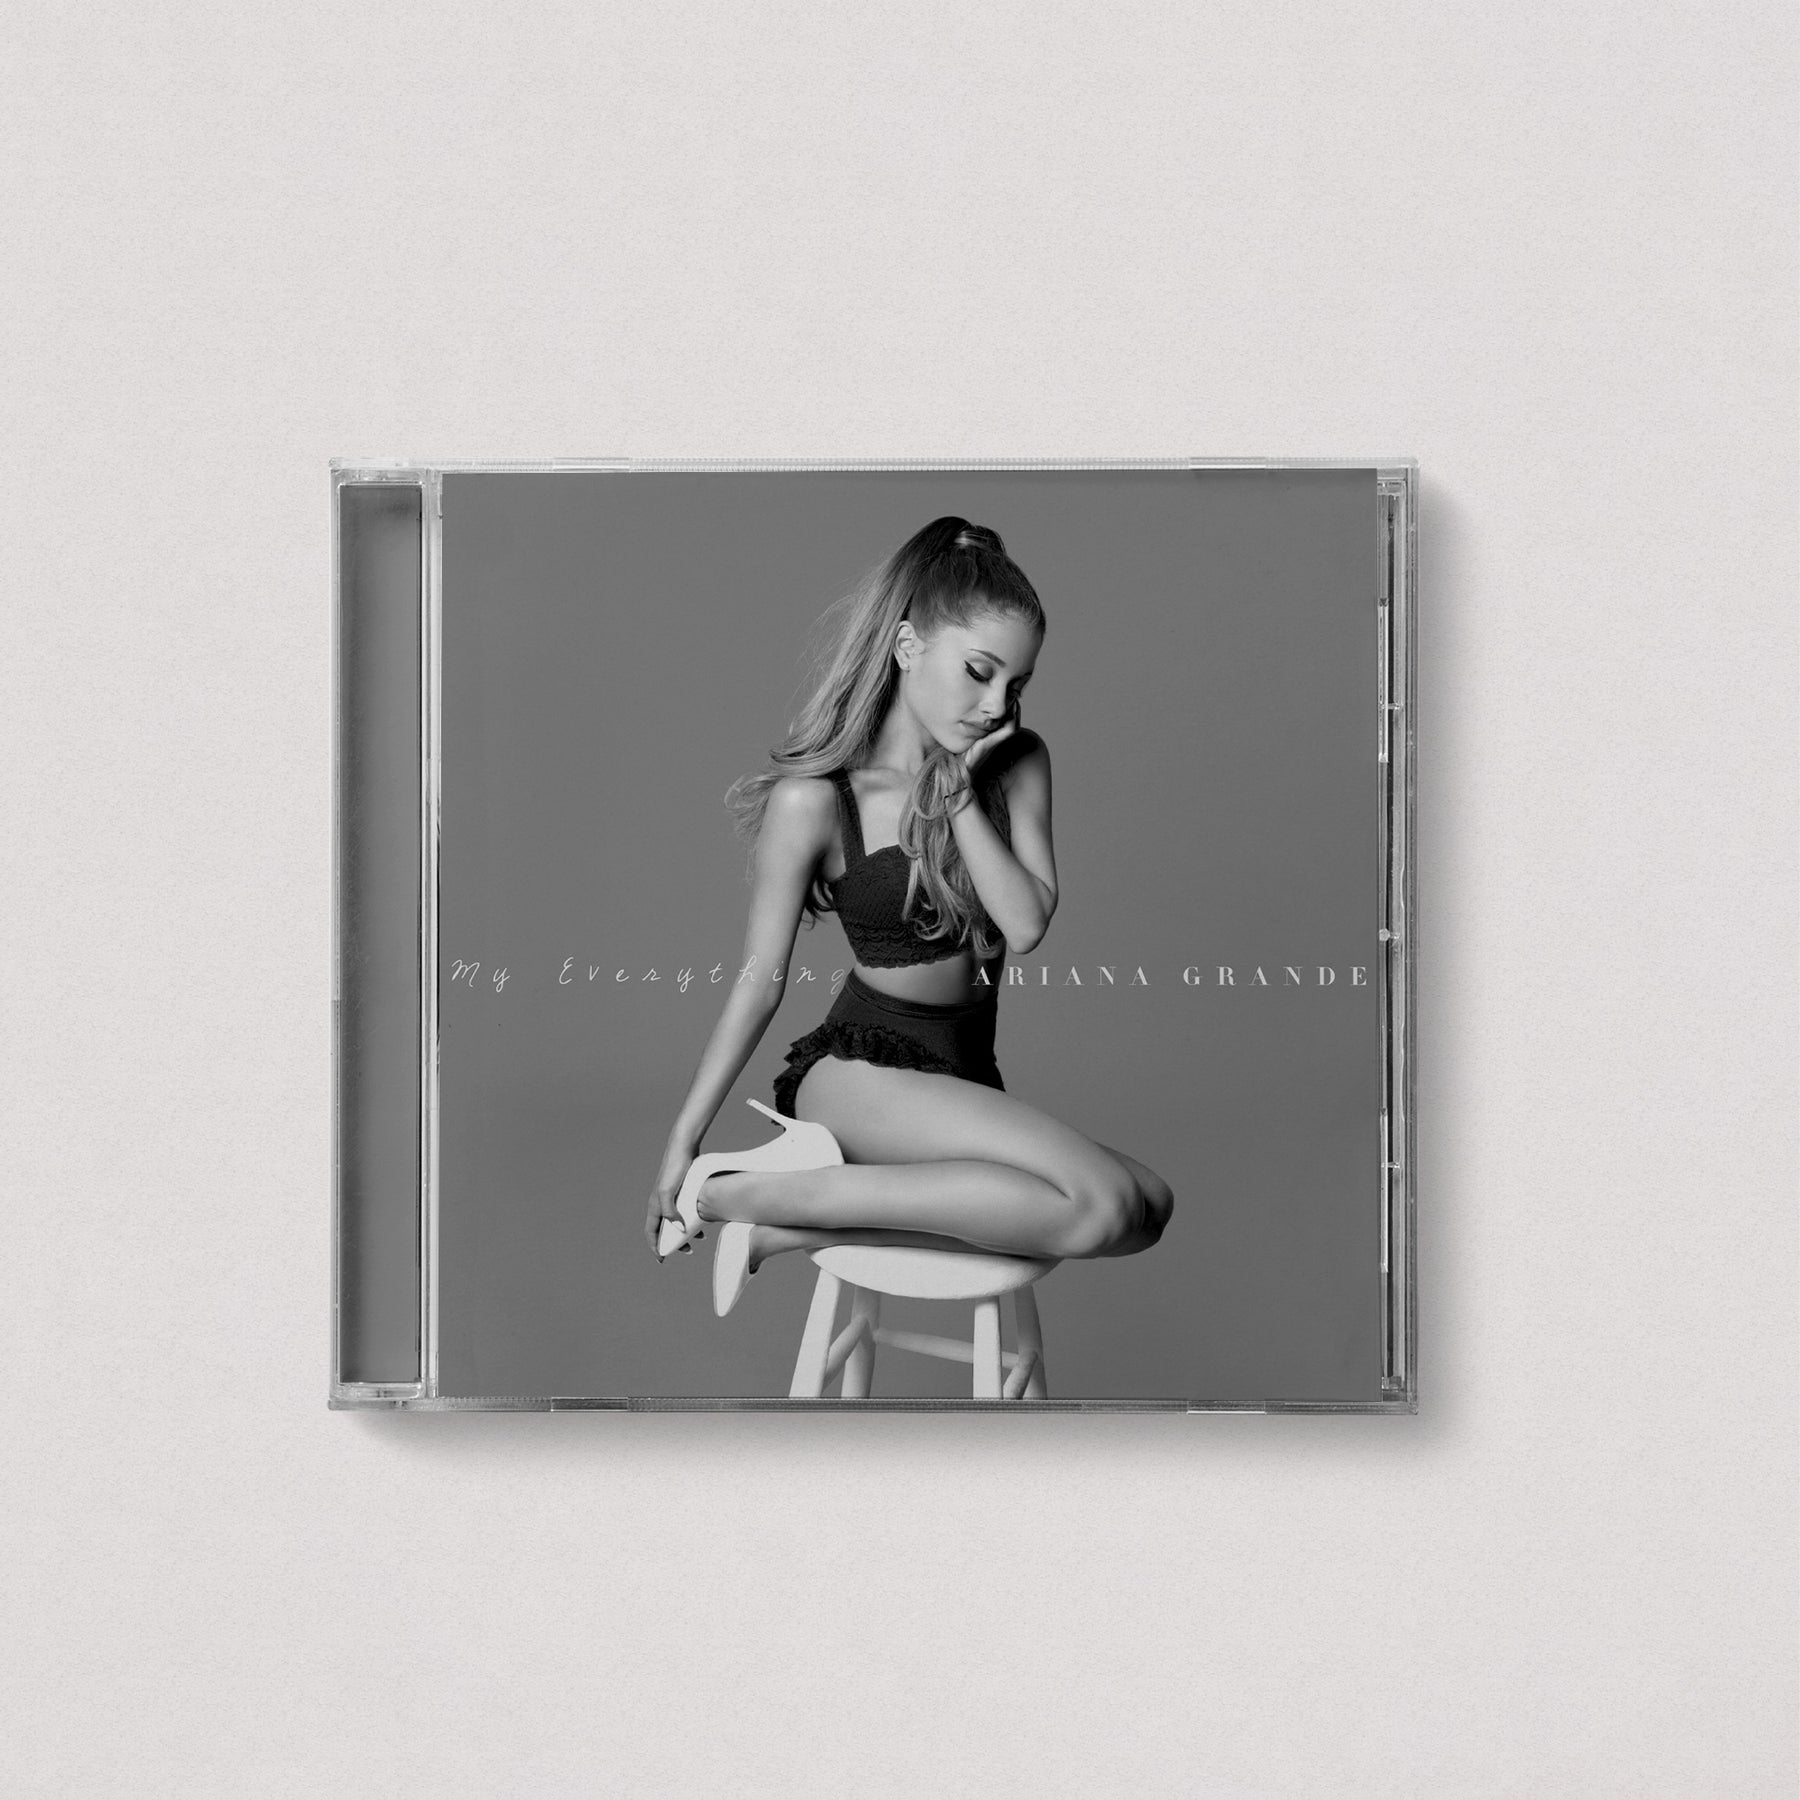 Ariana Grande - My Everything (Standard, CD)